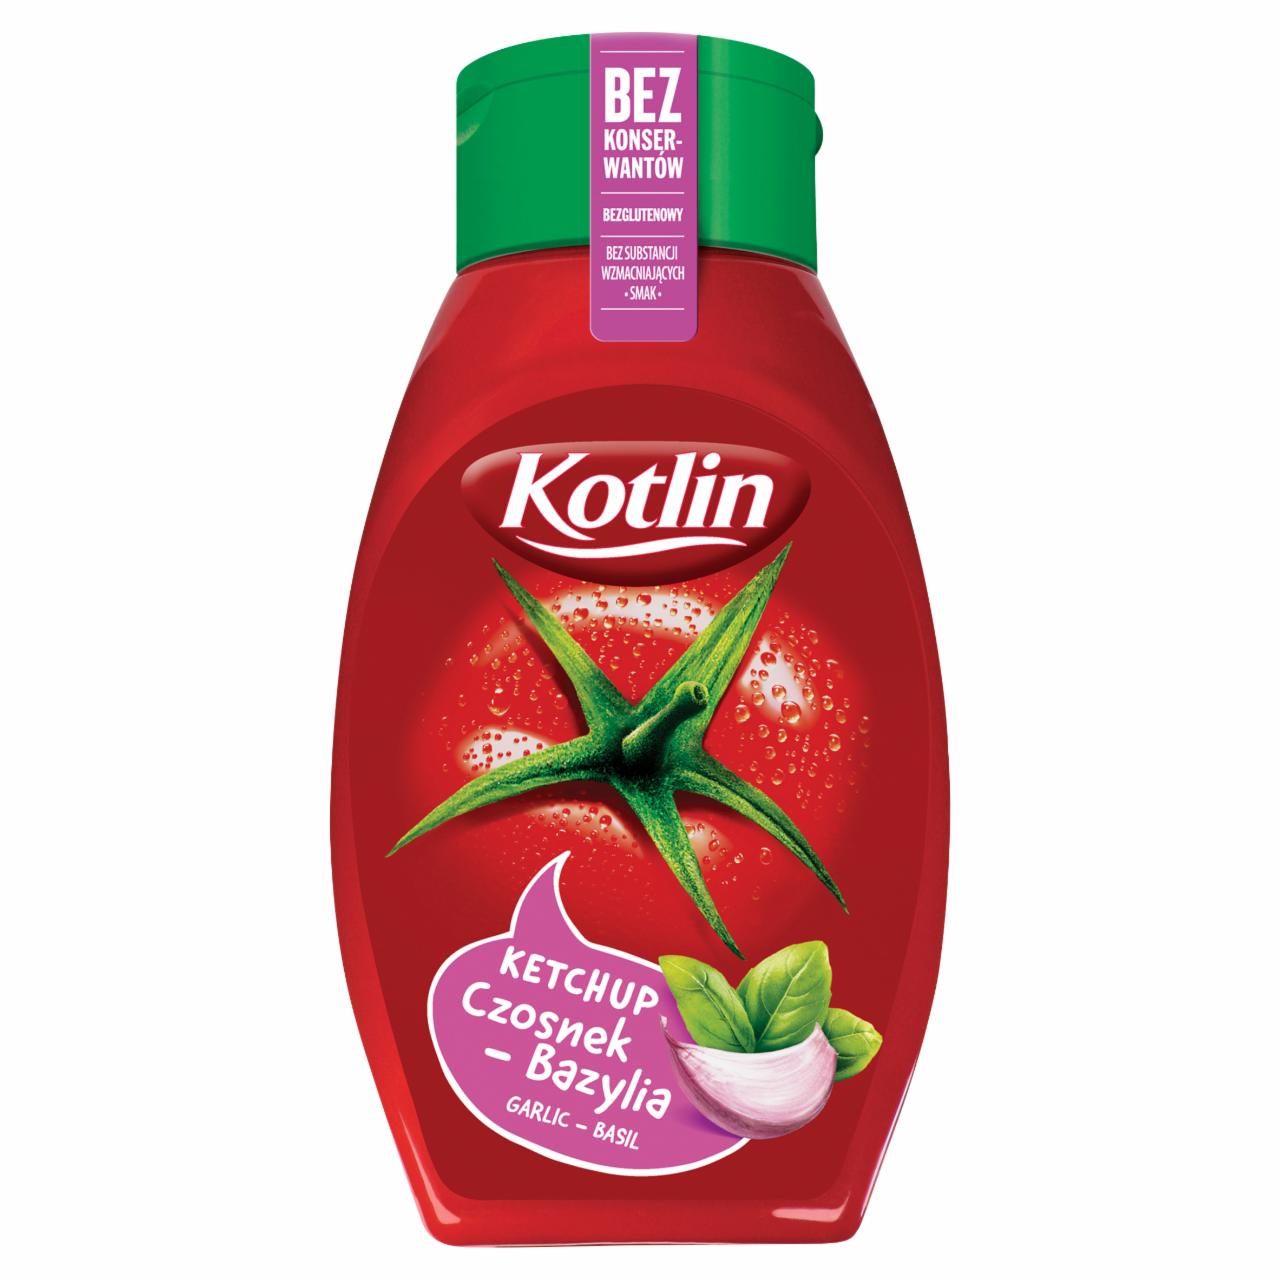 Zdjęcia - Kotlin Ketchup czosnek-bazylia 450 g